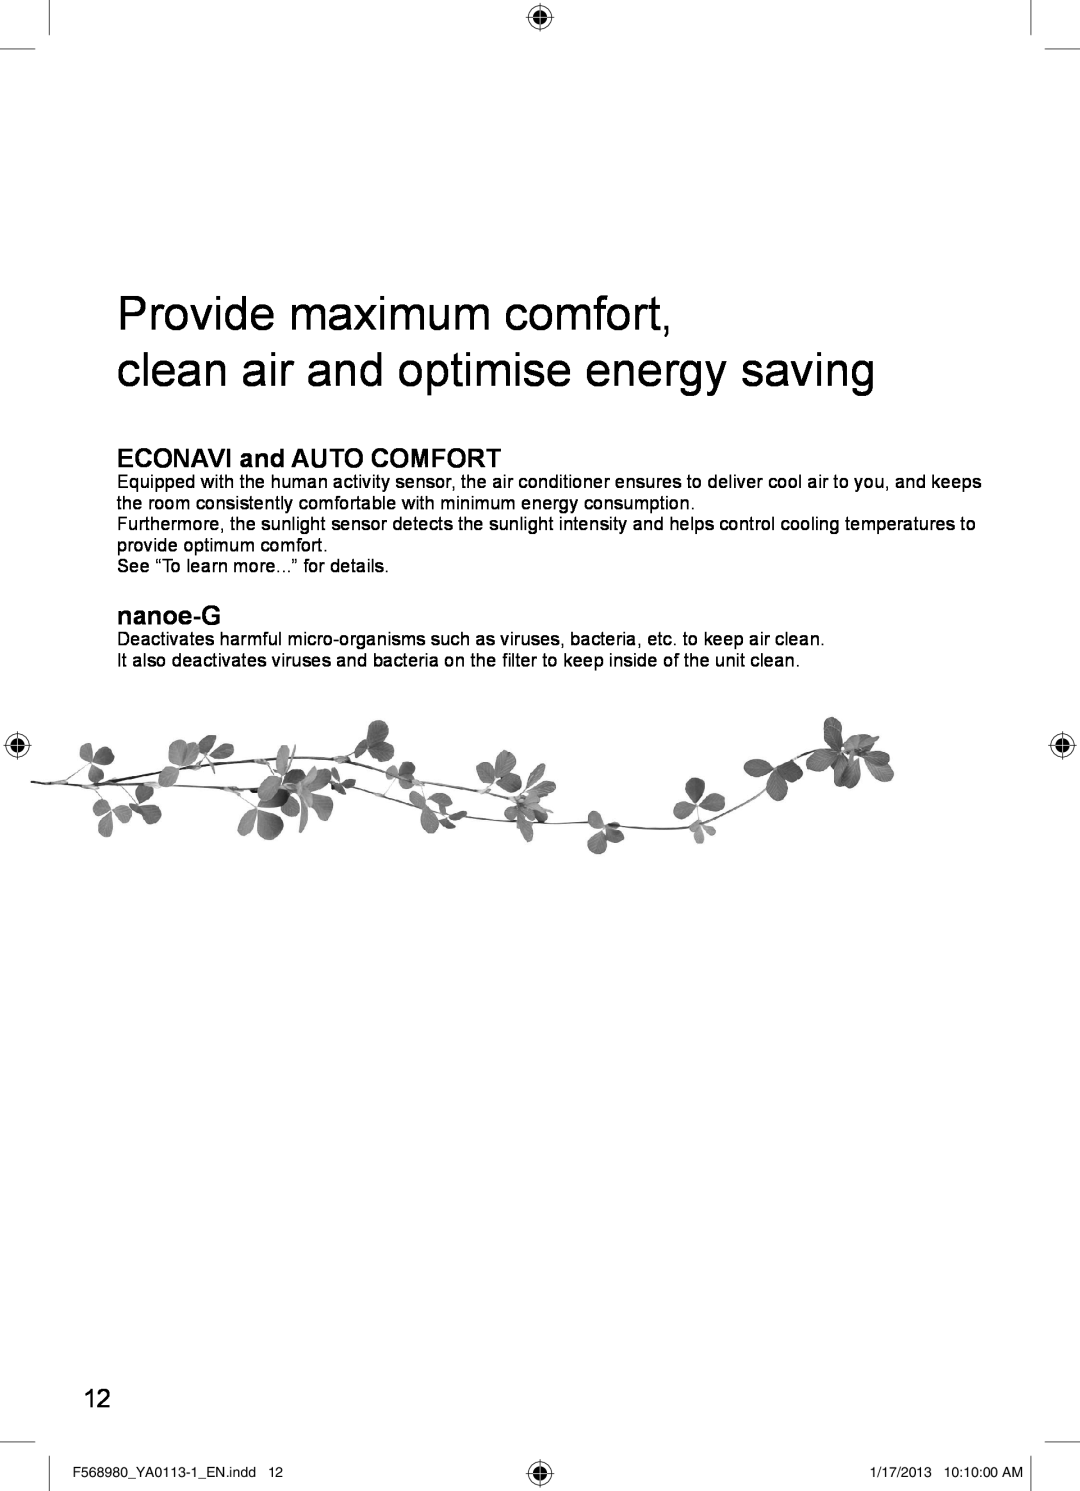 Panasonic CU-K18PKF Provide maximum comfort, clean air and optimise energy saving, ECONAVI and AUTO COMFORT, nanoe-G 